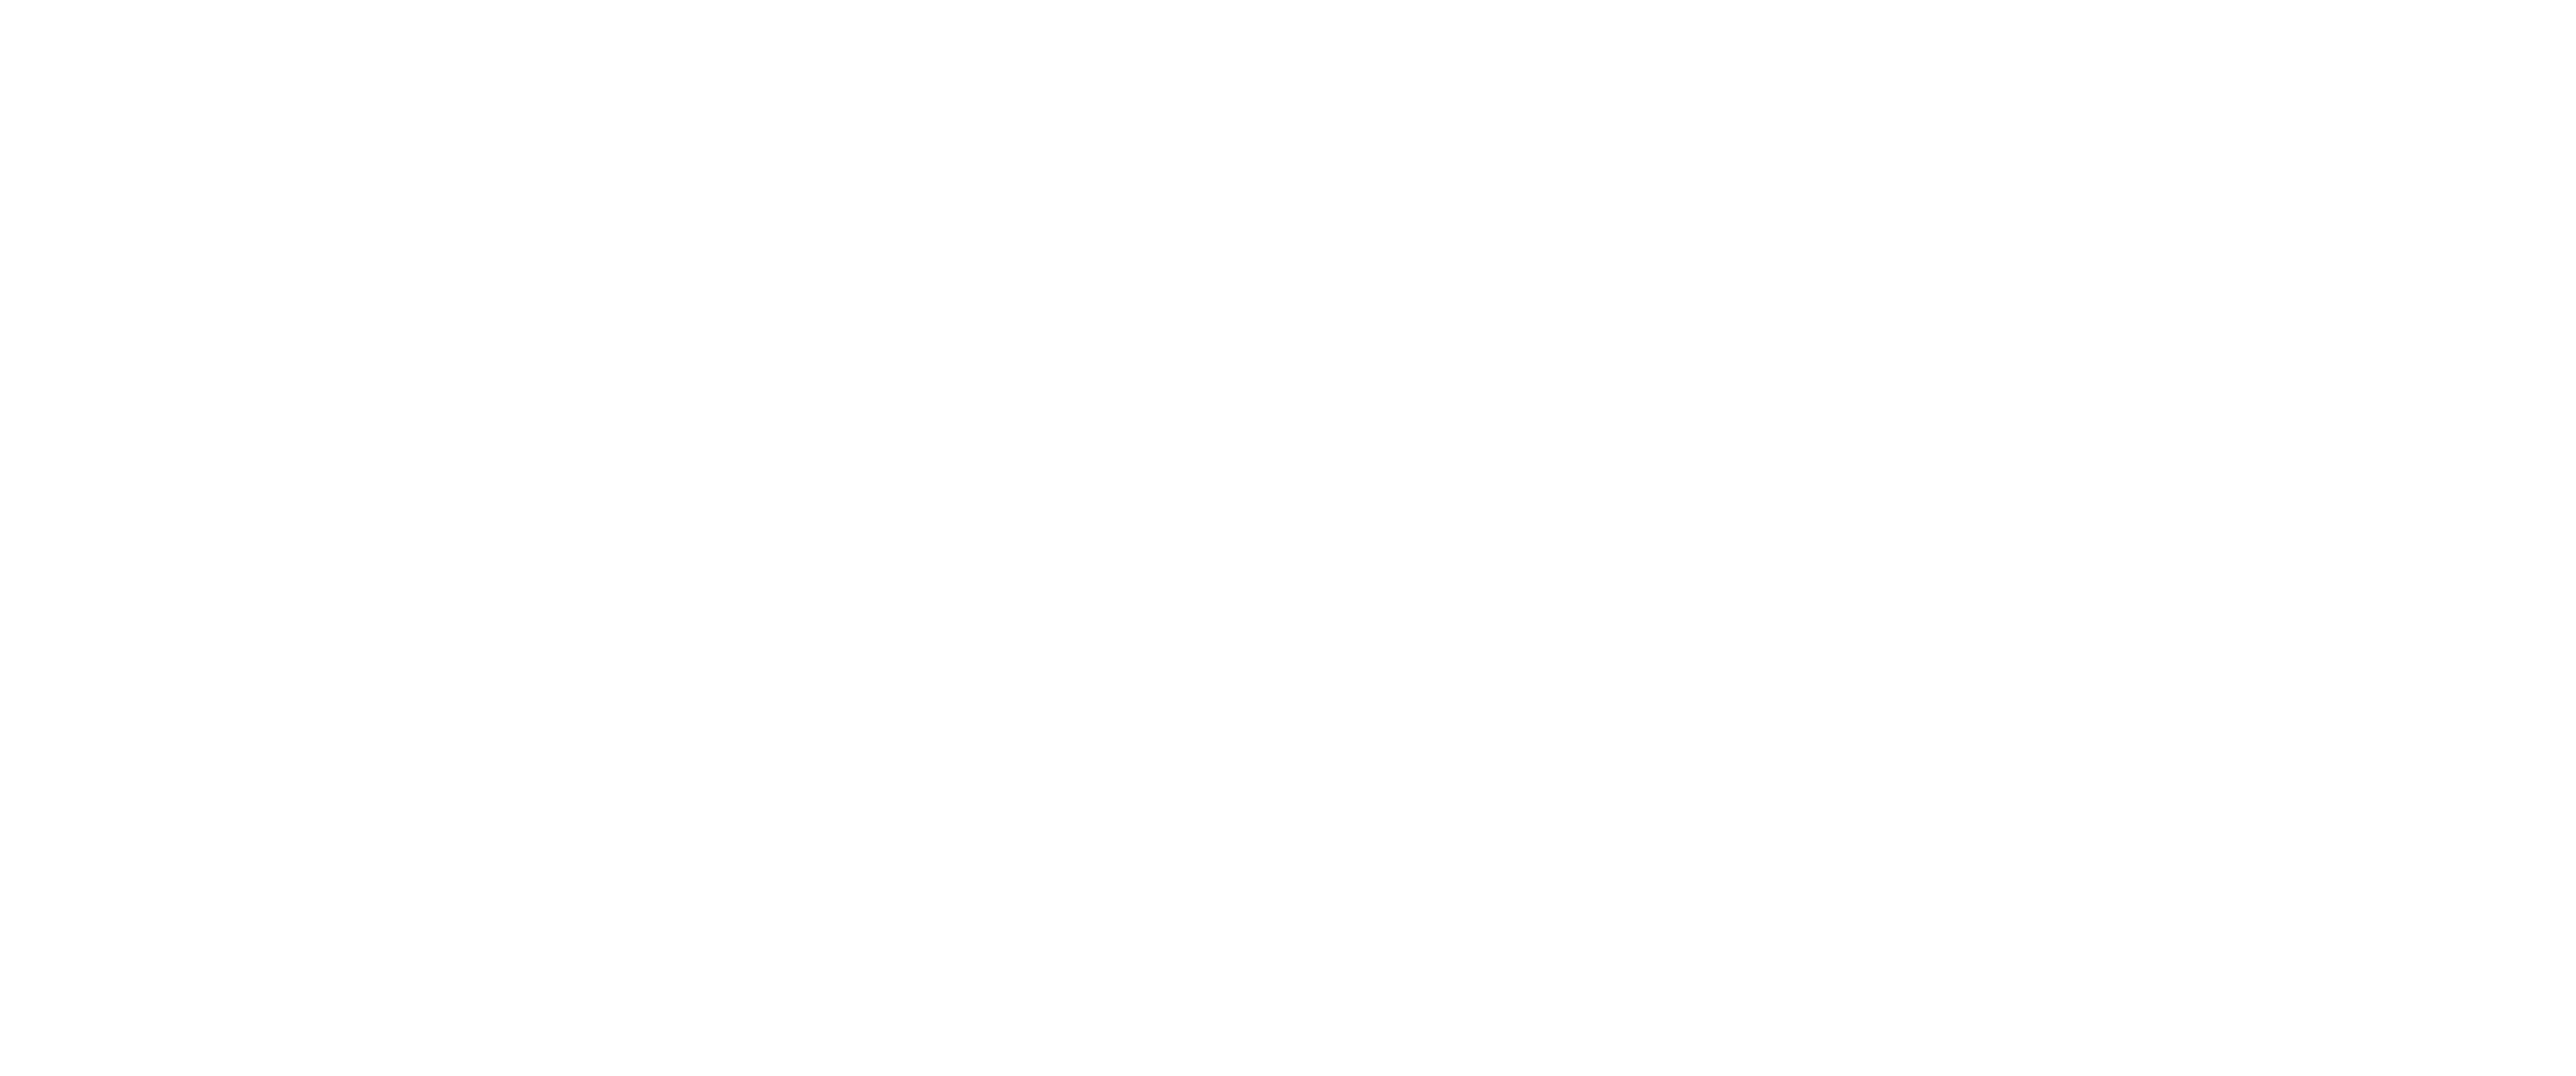 REPUBLICA PORTUGUESA CULTURA branco